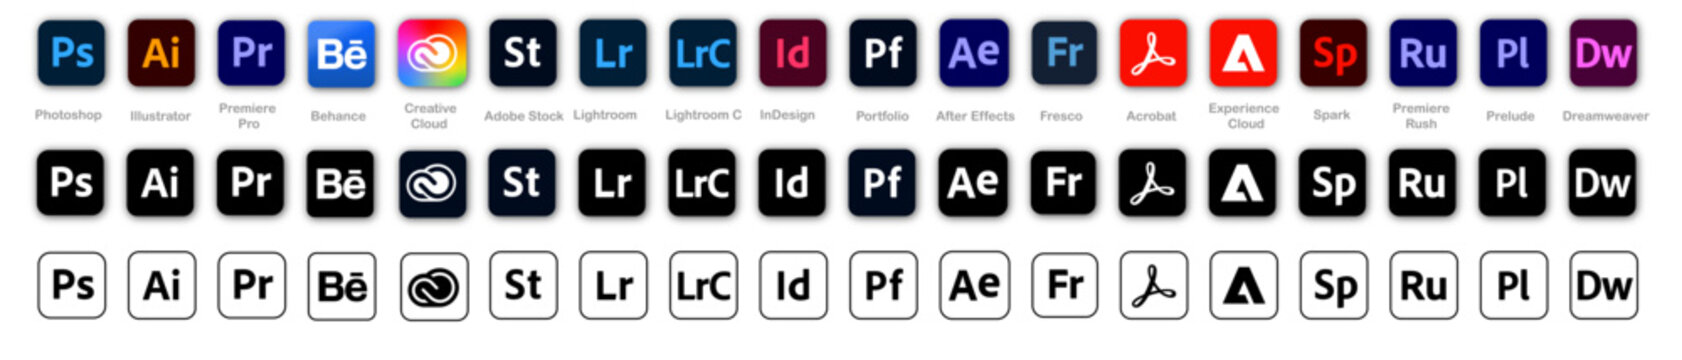 Adobe product. Logotype set of Adobe products: adobe, illustrator, photoshop, creative cloud, after effects, lightroom, fresco, Stock, acrobat, Editorial vector illustration 10 EPS